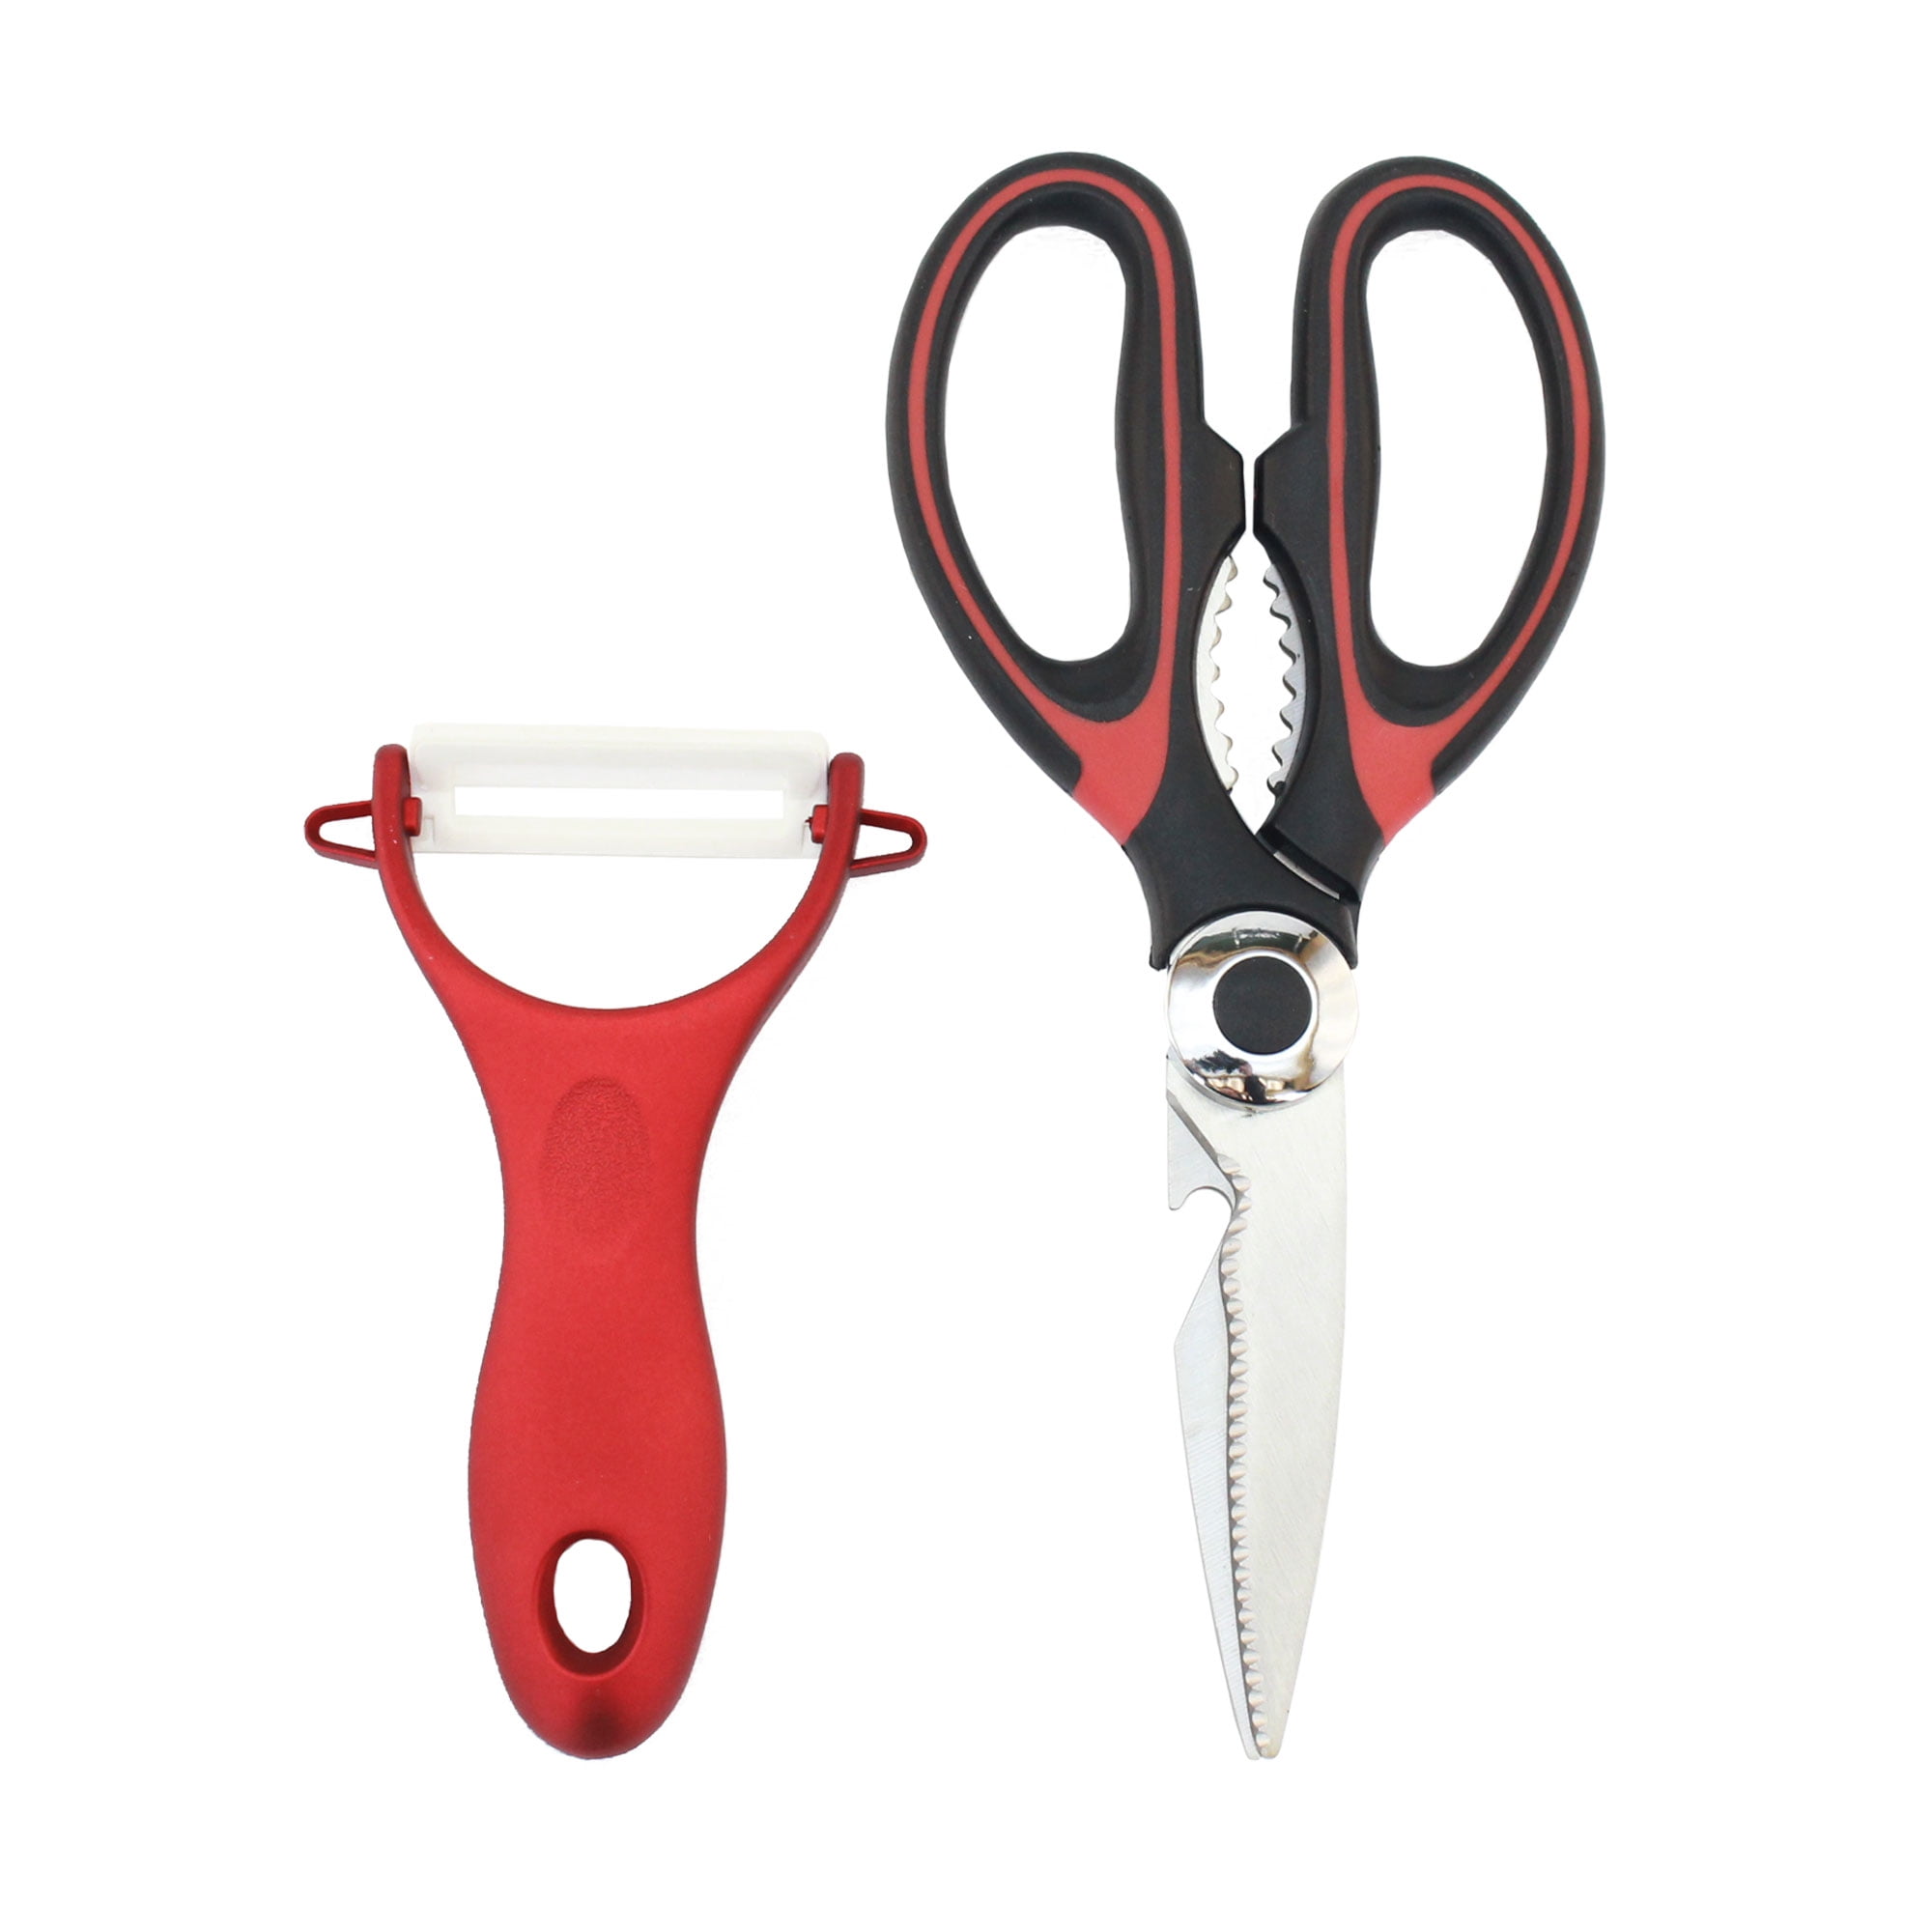 Details about   Betty Crocker Sharp Kitchen Scissors Shears Multi Purpose Stainless Heavy Duty 